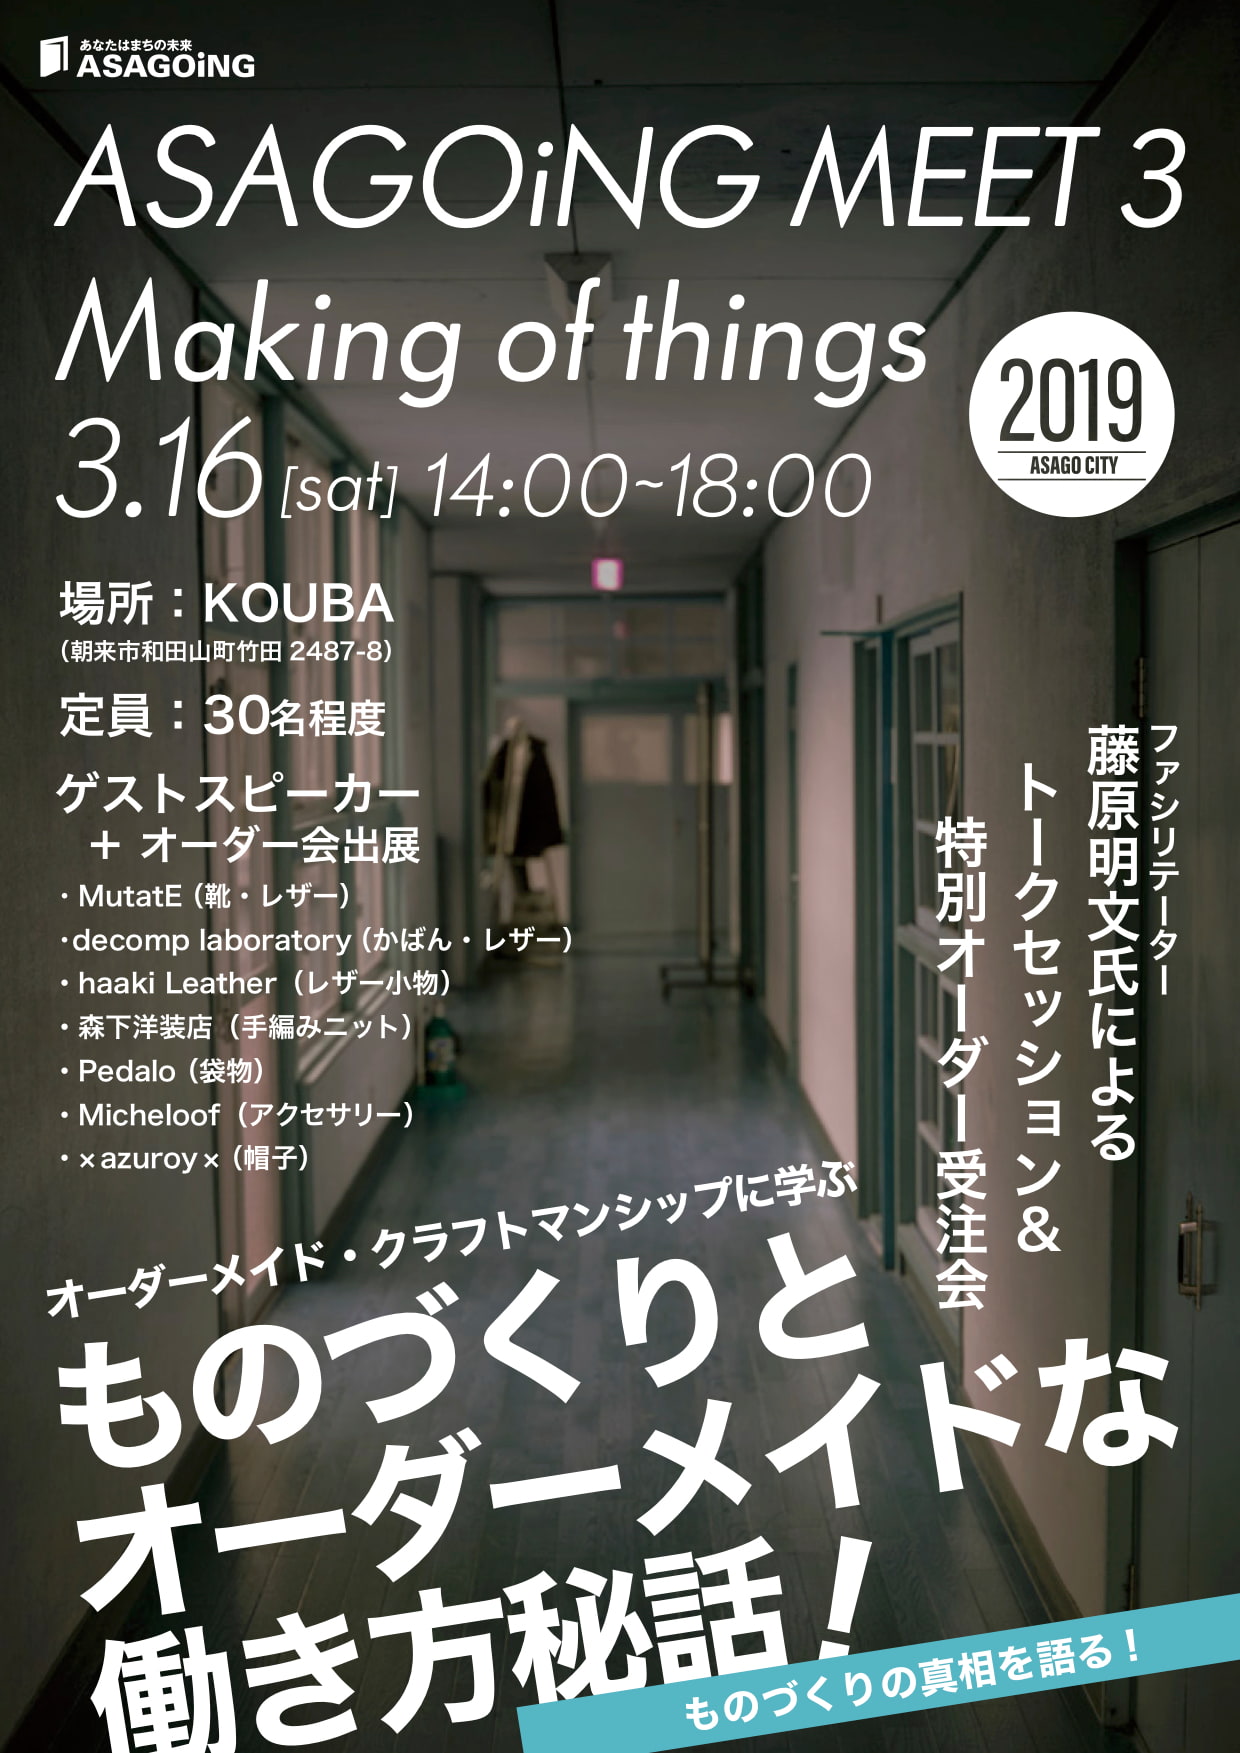 ASAGOiNG MEET 3 “Making of things”開催のお知らせ